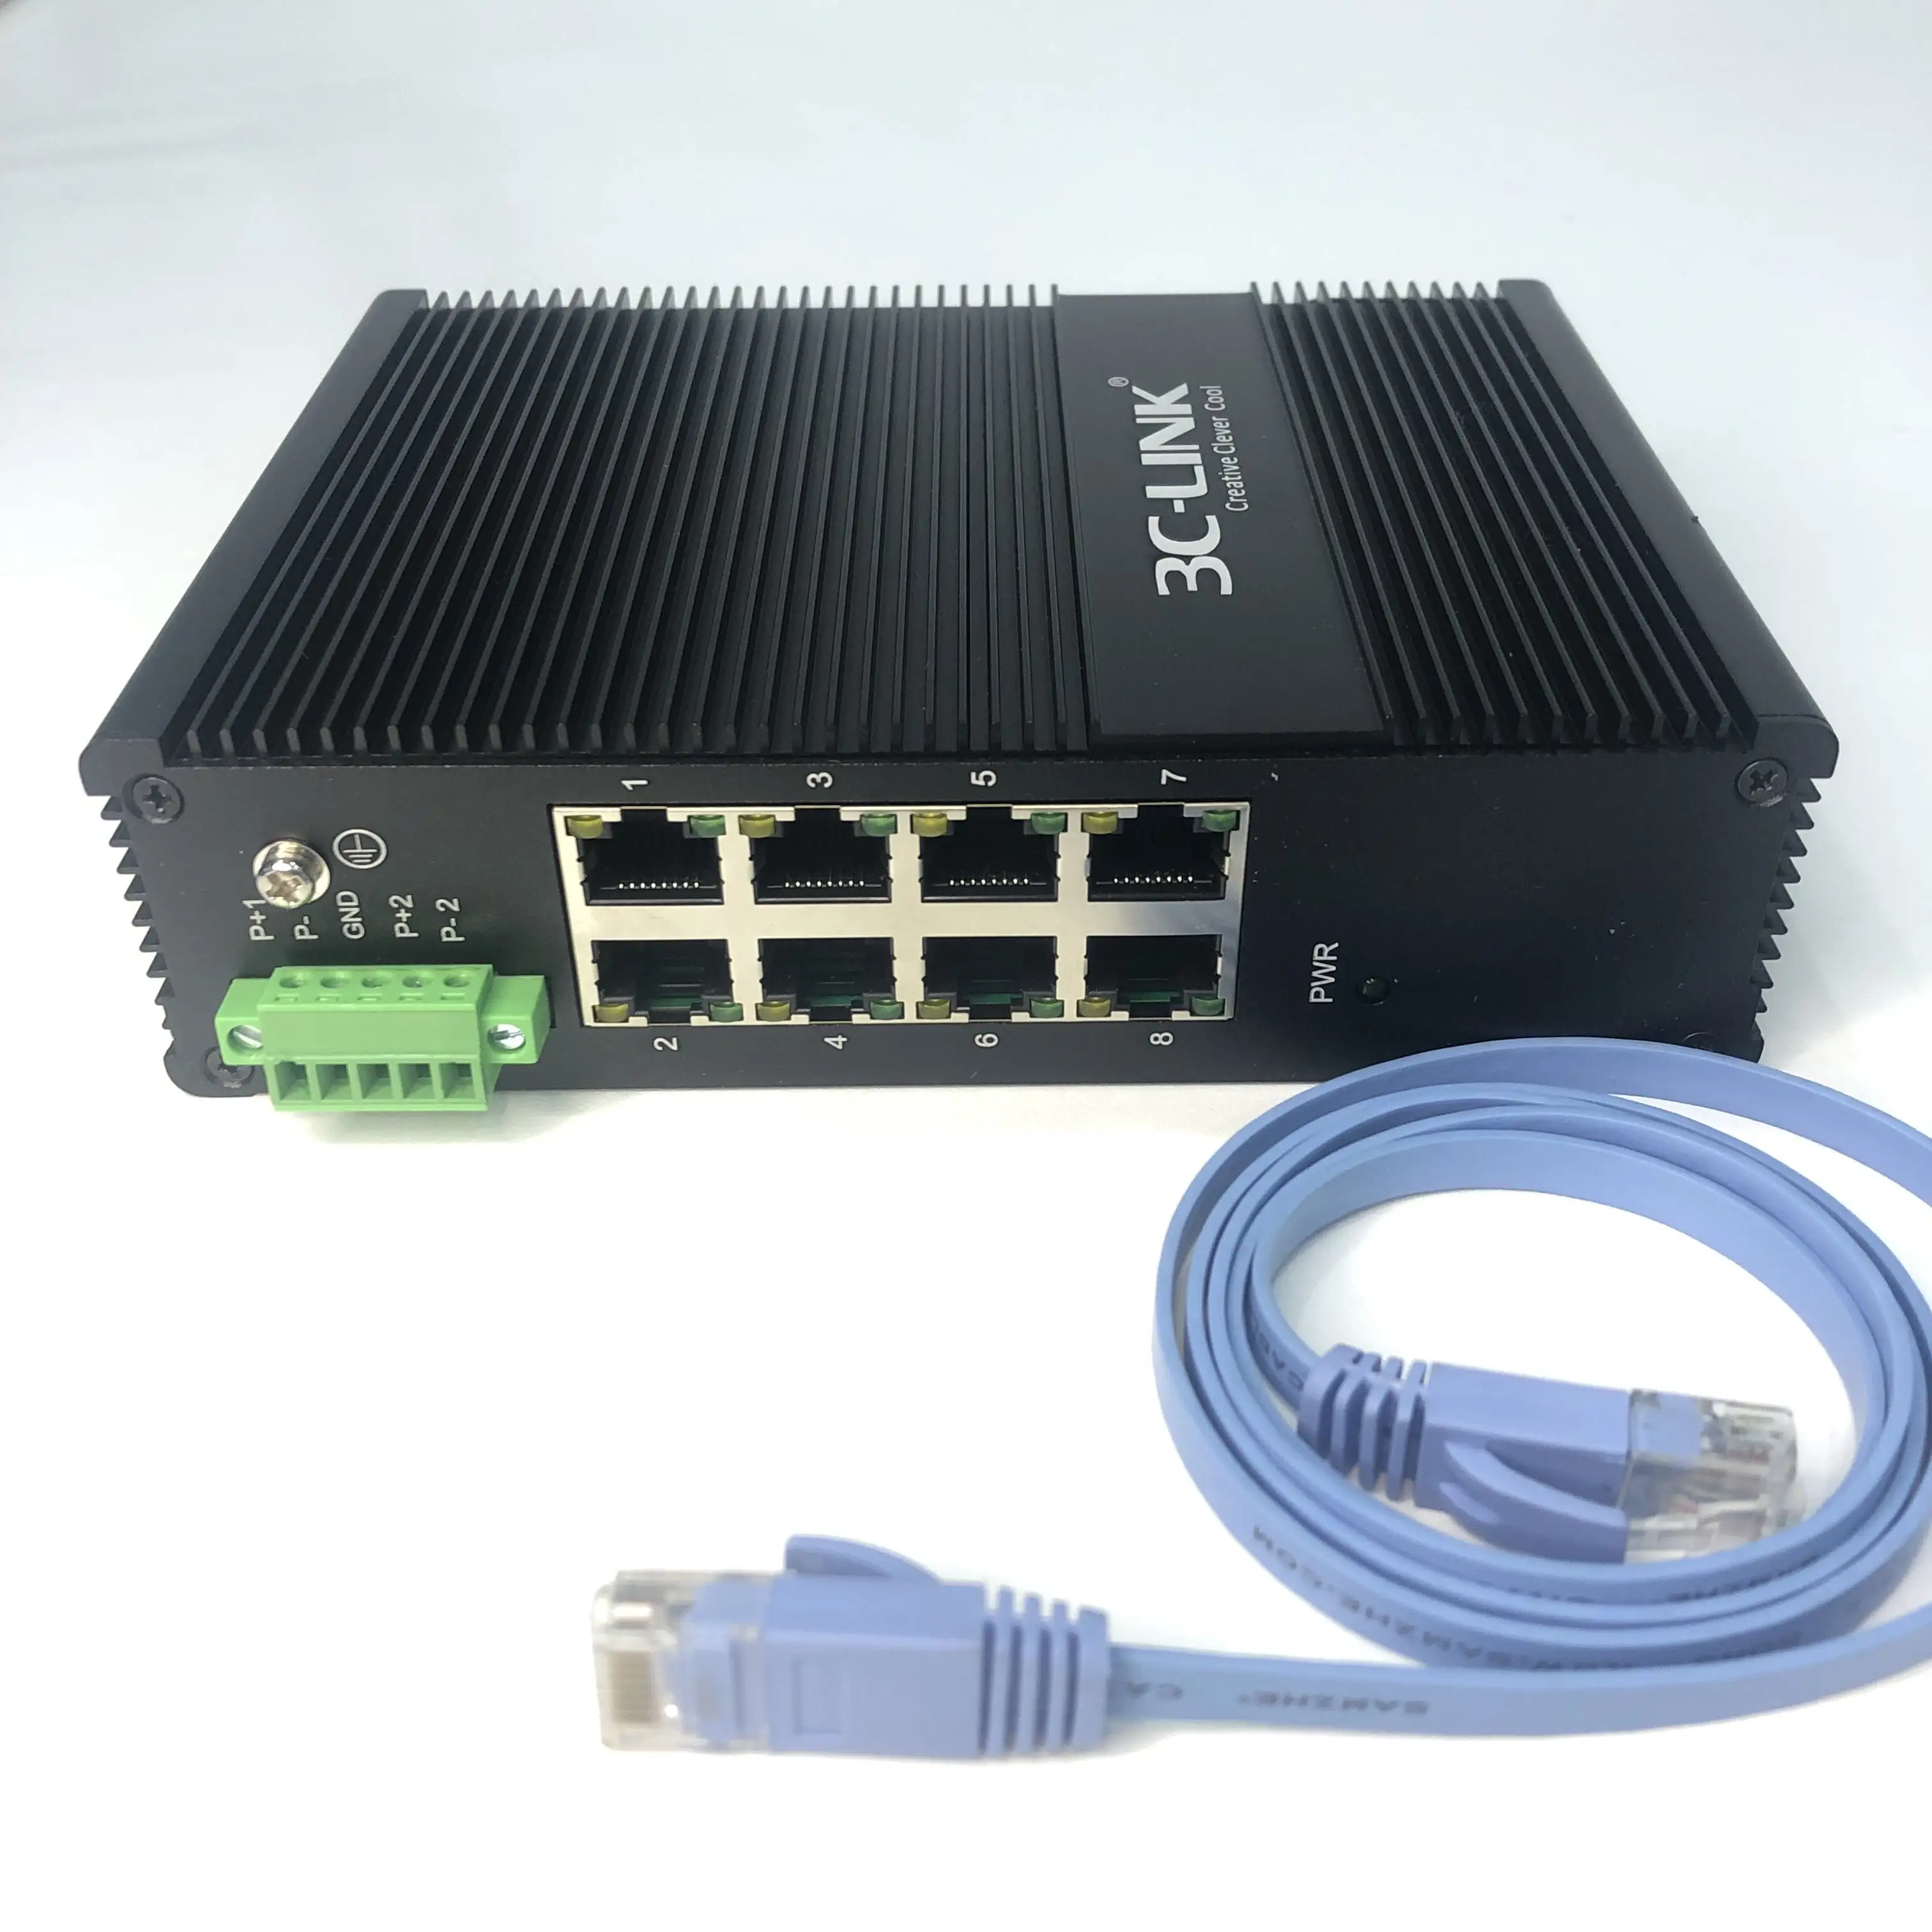 IES 8TX 10/100/1000M BASE-T Gigabit Ethernet POE RJ45 copper ports industrial switch